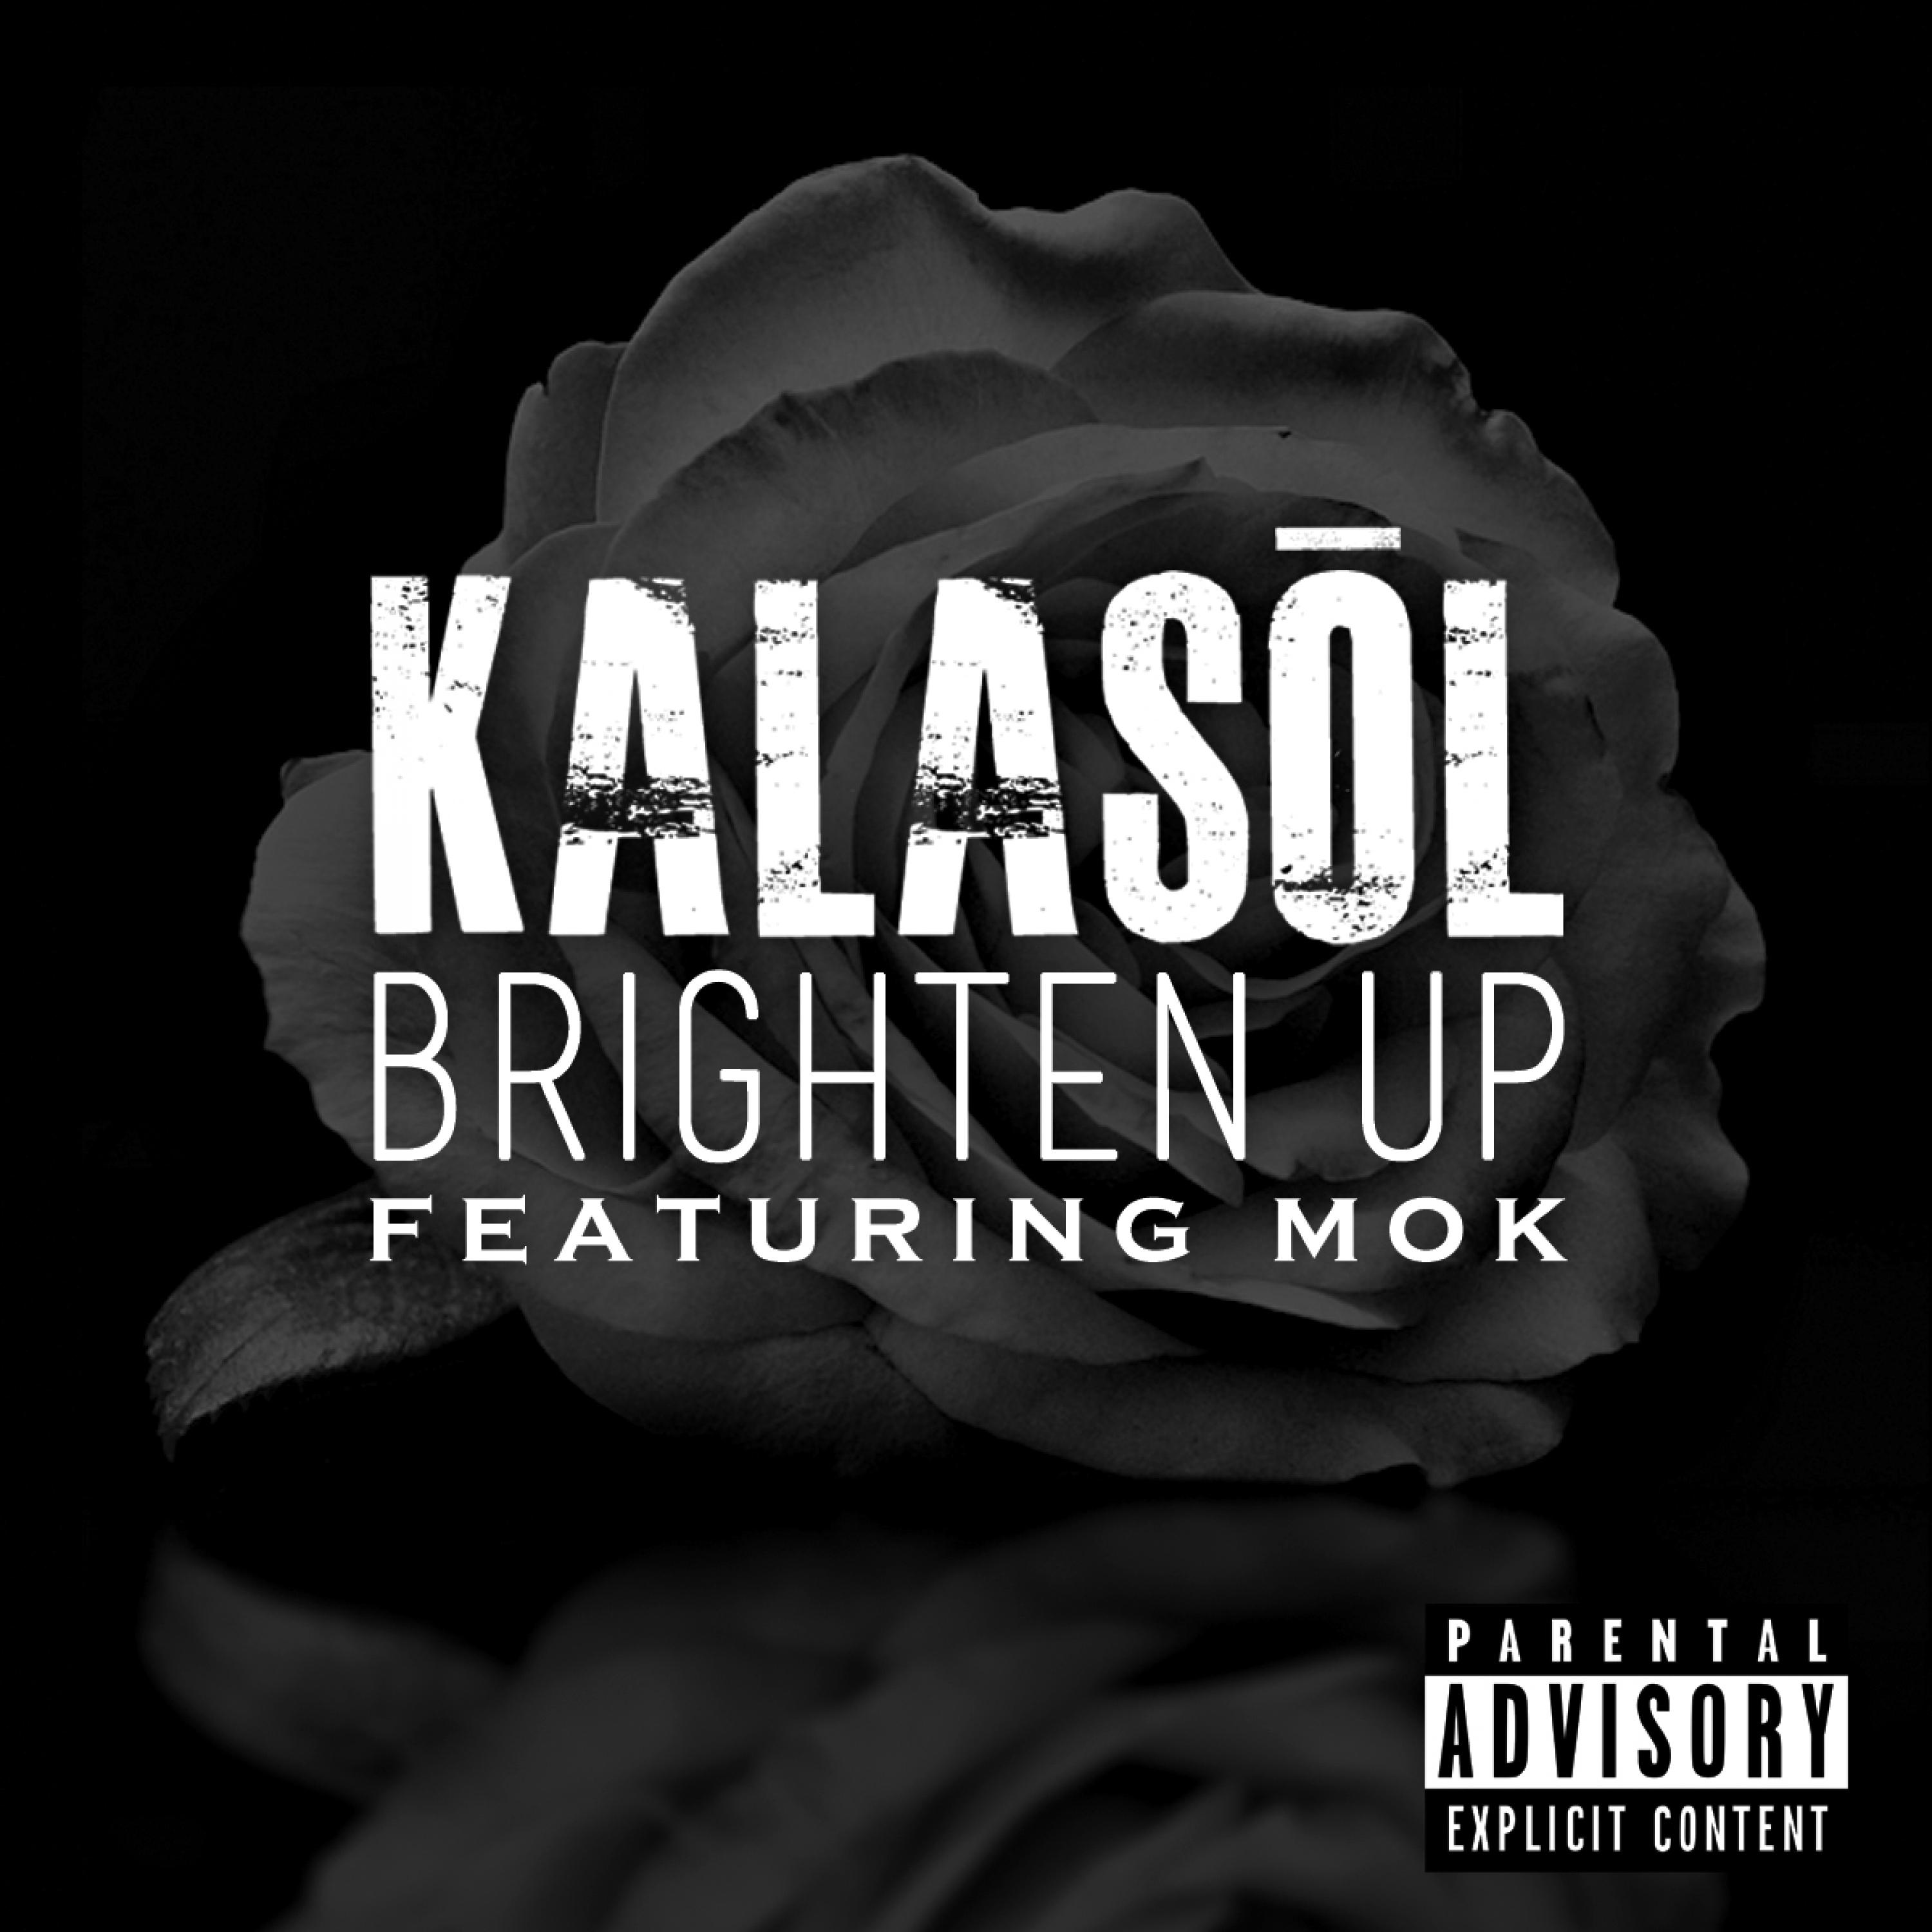 Brighten Up (feat. Mok) - Single